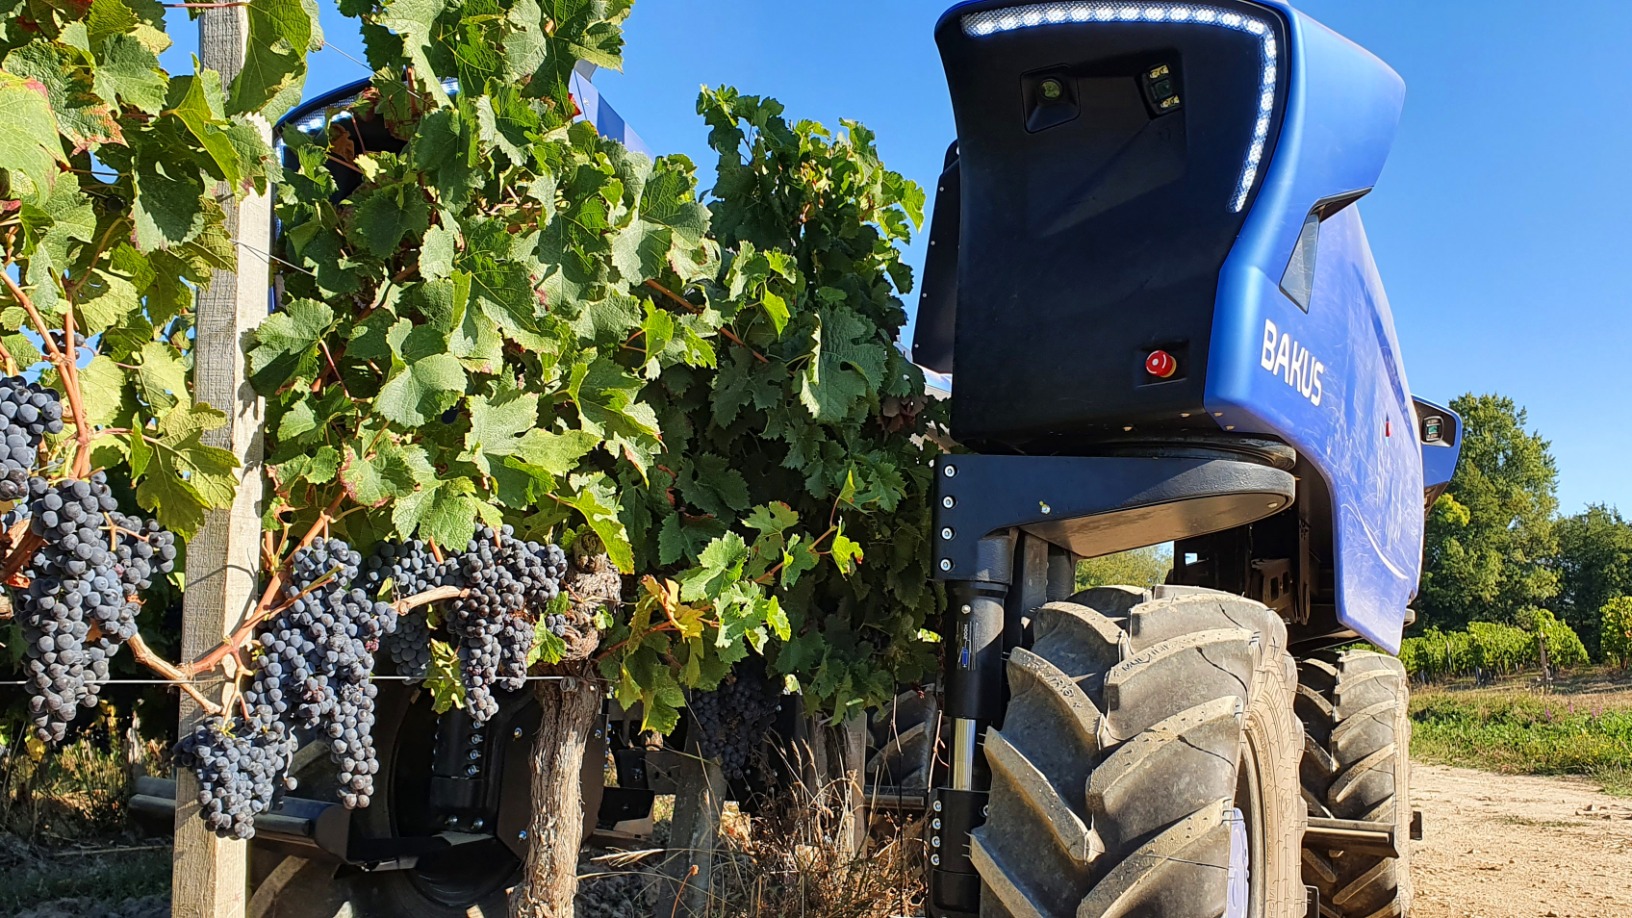 VitiBot: Using robotics to make winemaking more sustainable